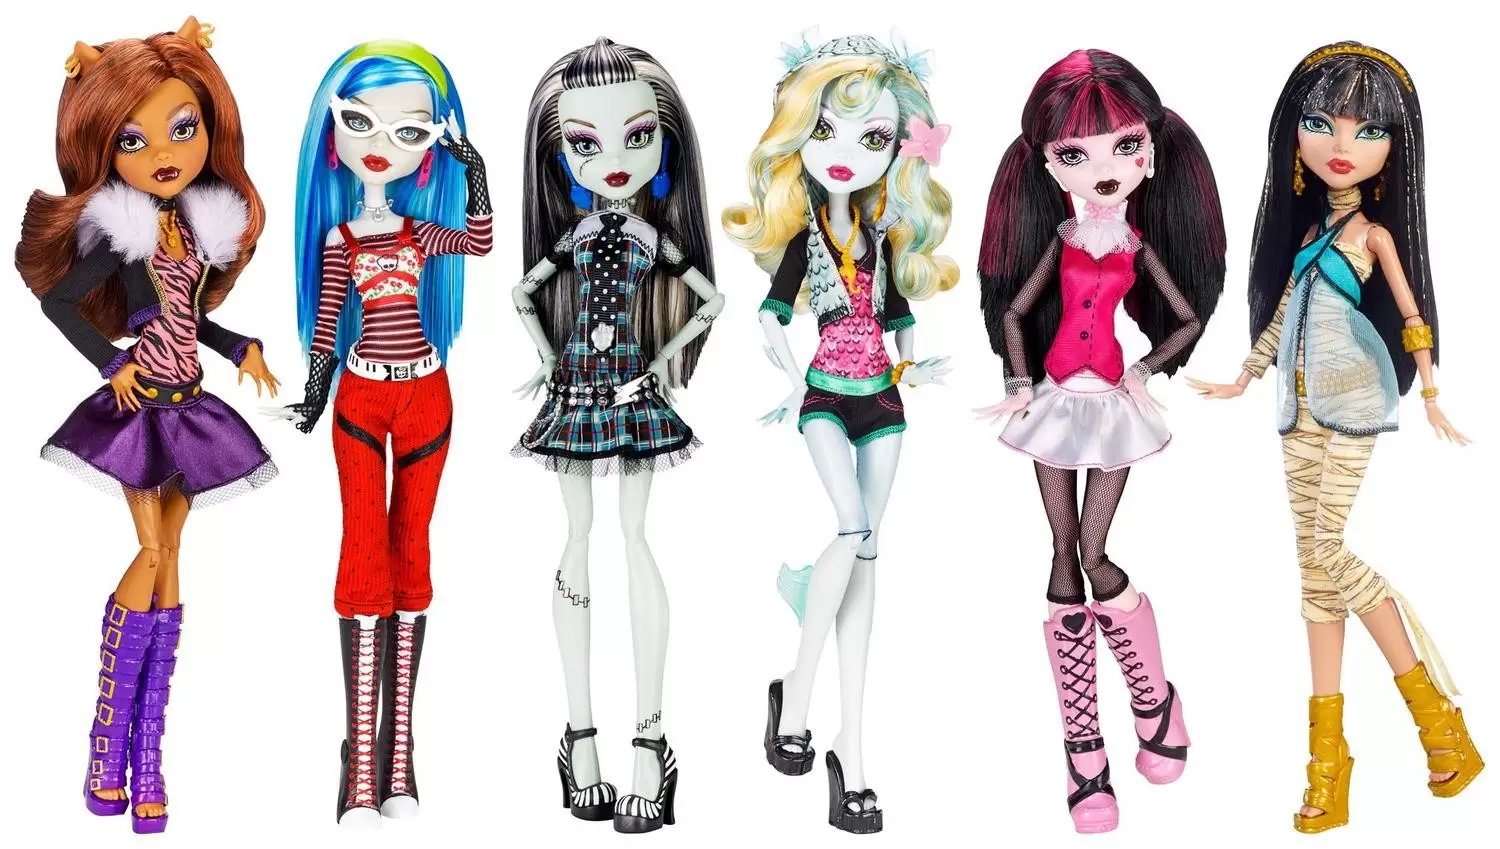 Monster High Doll Viperine Gorgon and Accessories Original Mattel